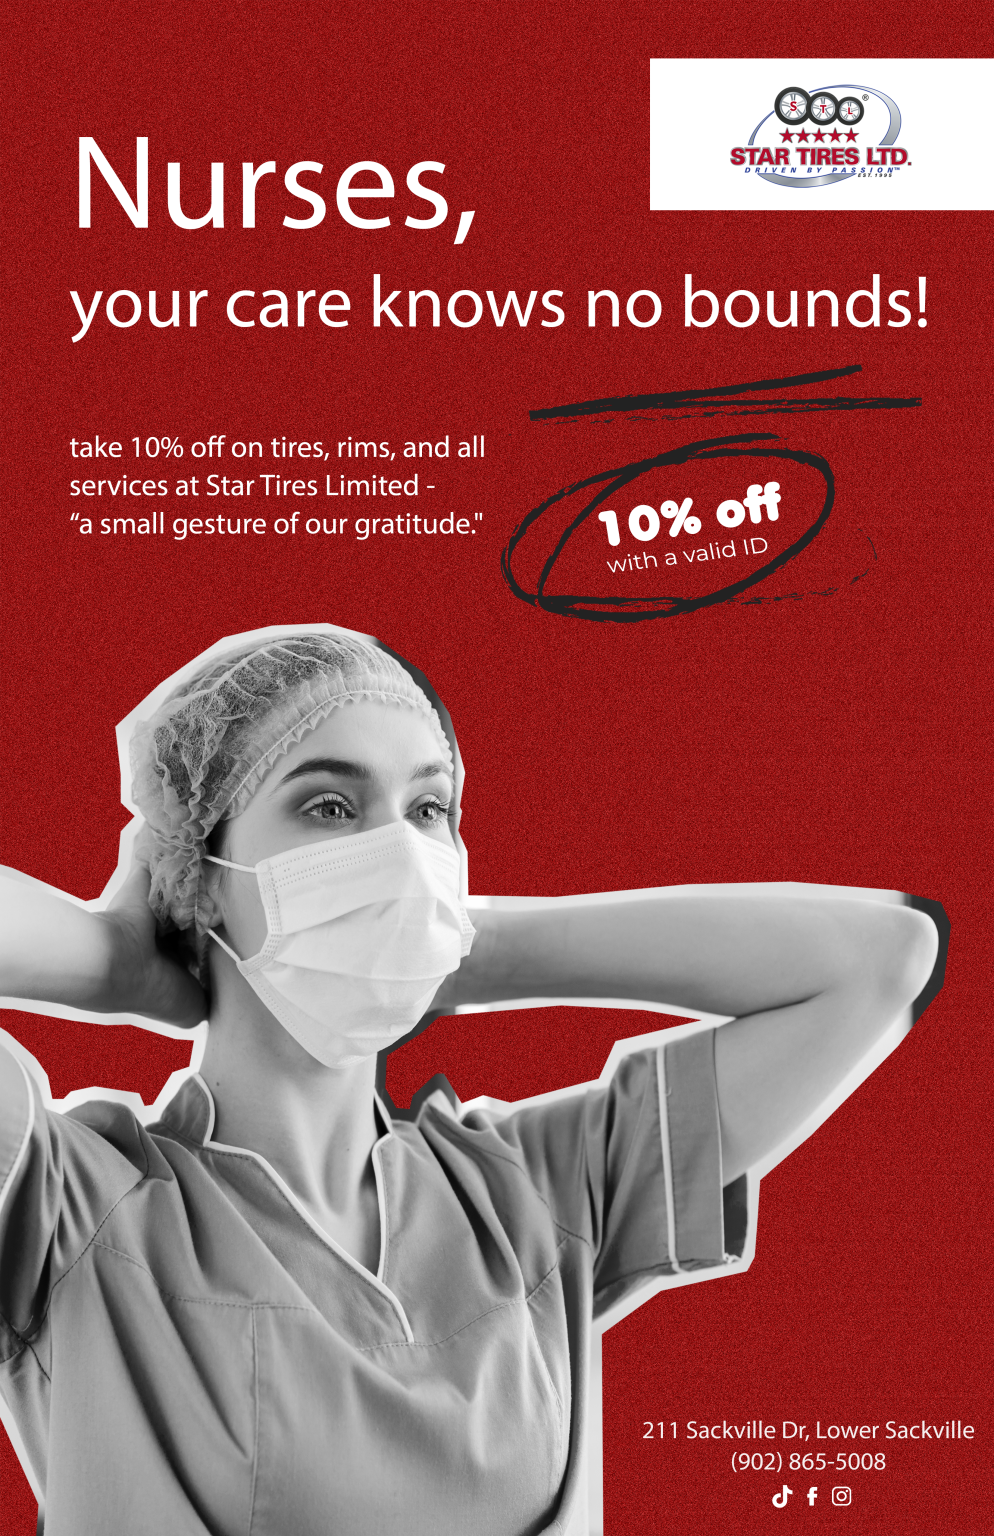 Nurses, your care knows no bounds!